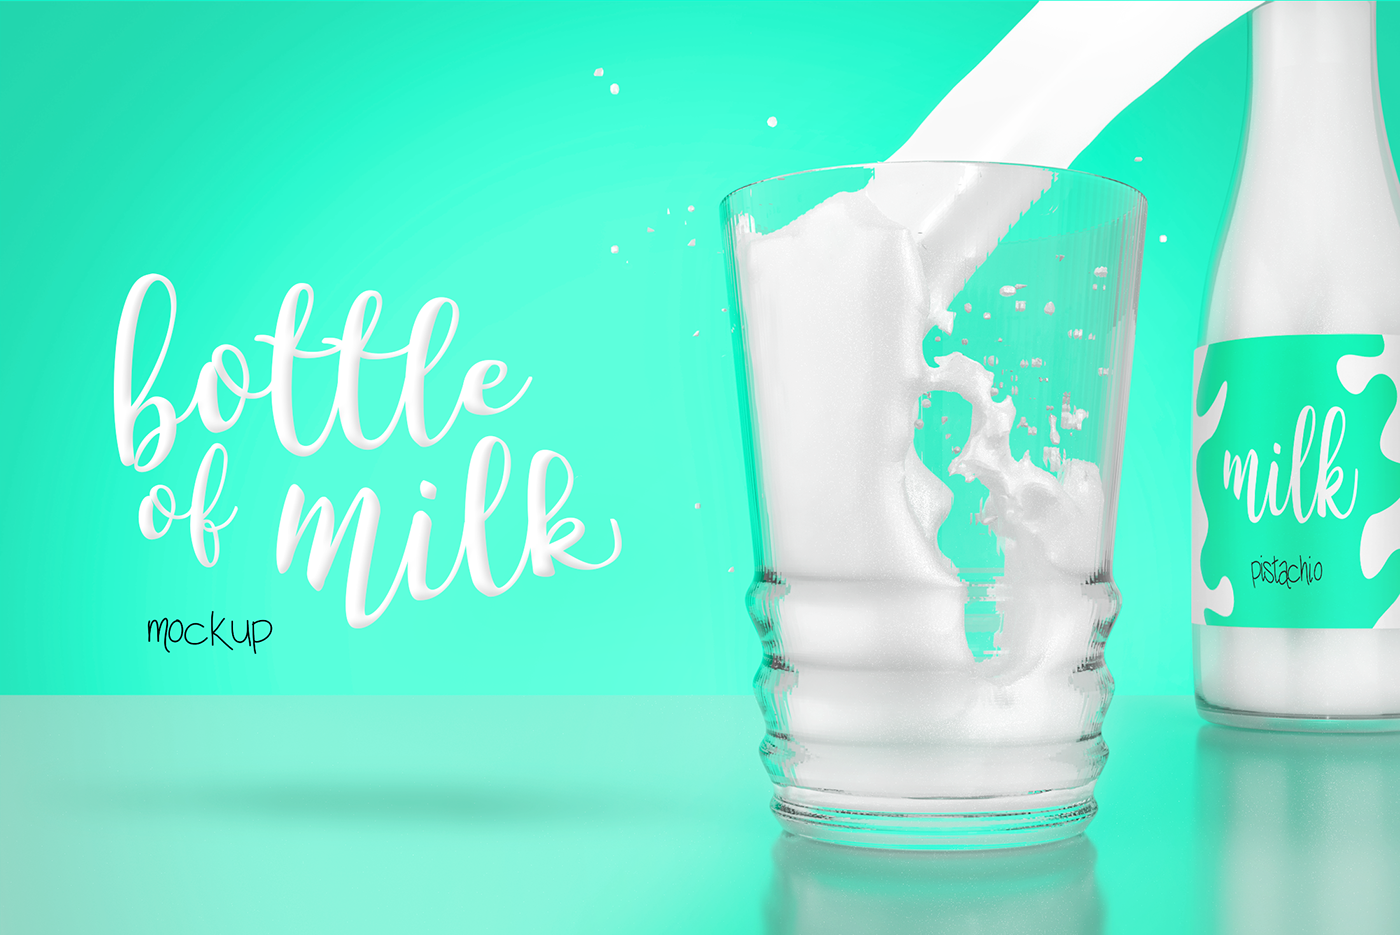 milk bottle Mockup pistachio milk download free 3D blender